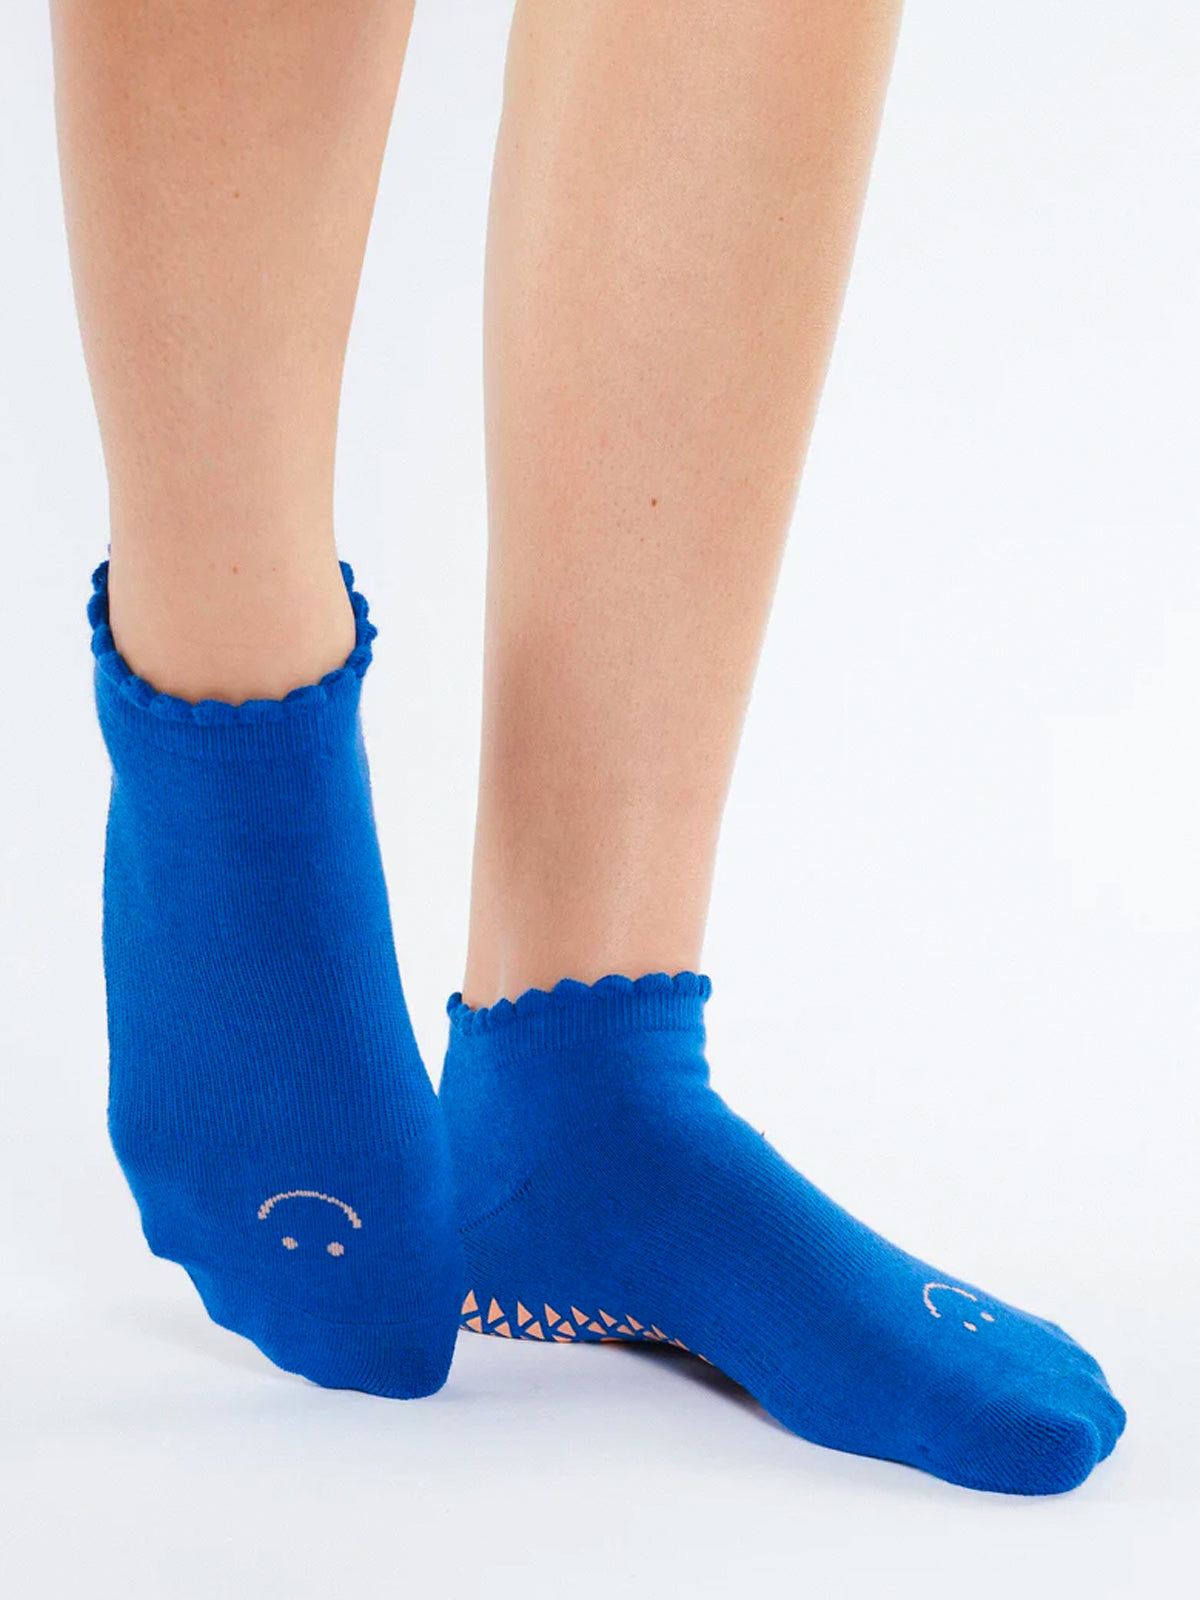 Gripjoy Socks Blue Grip Socks for Toddlers & Kids - 4 Pack - Royal